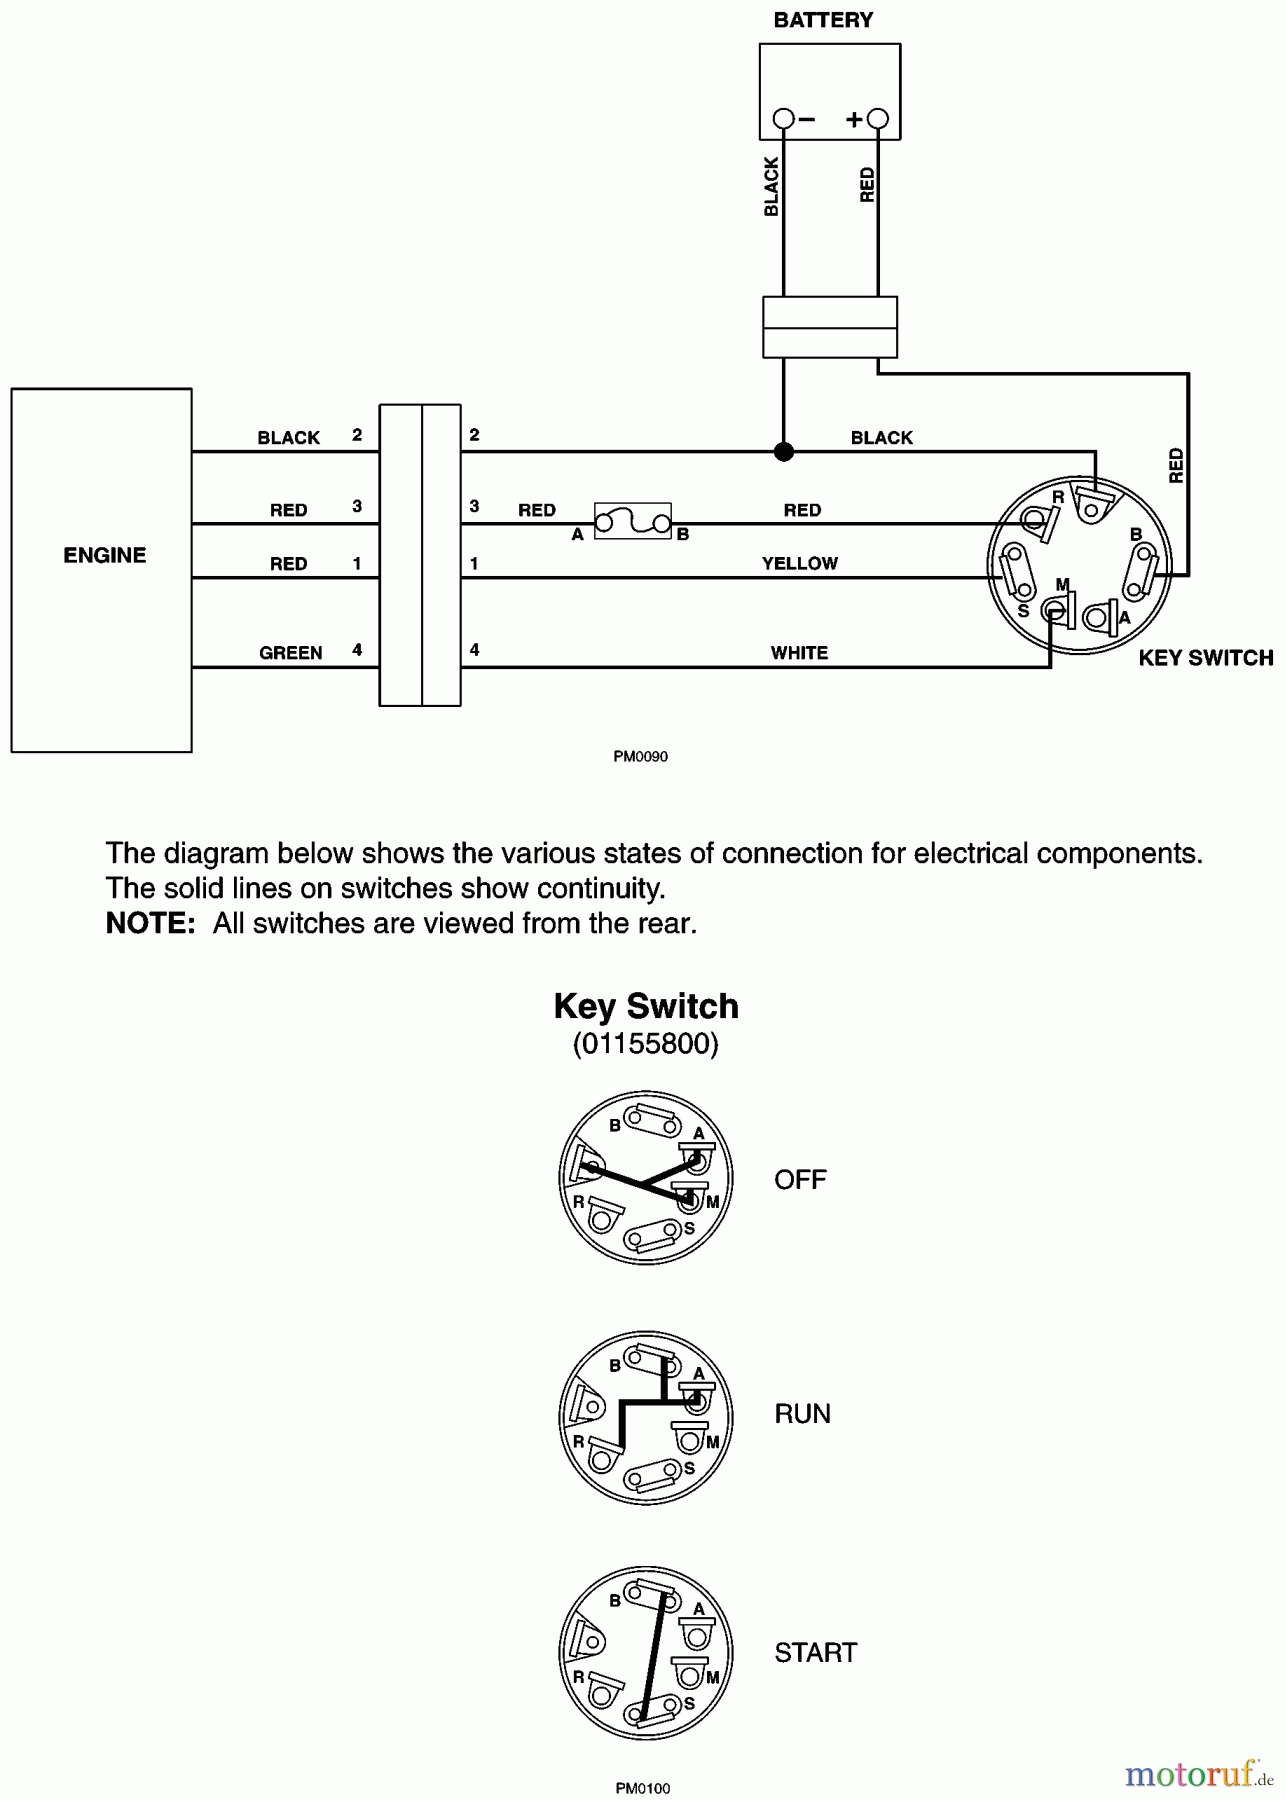  Husqvarna Rasenmäher 580 RSW (601100022) - Husqvarna Walk-Behind Mower (2000-03 to 2000-10) Electrical And Continuity Diagram